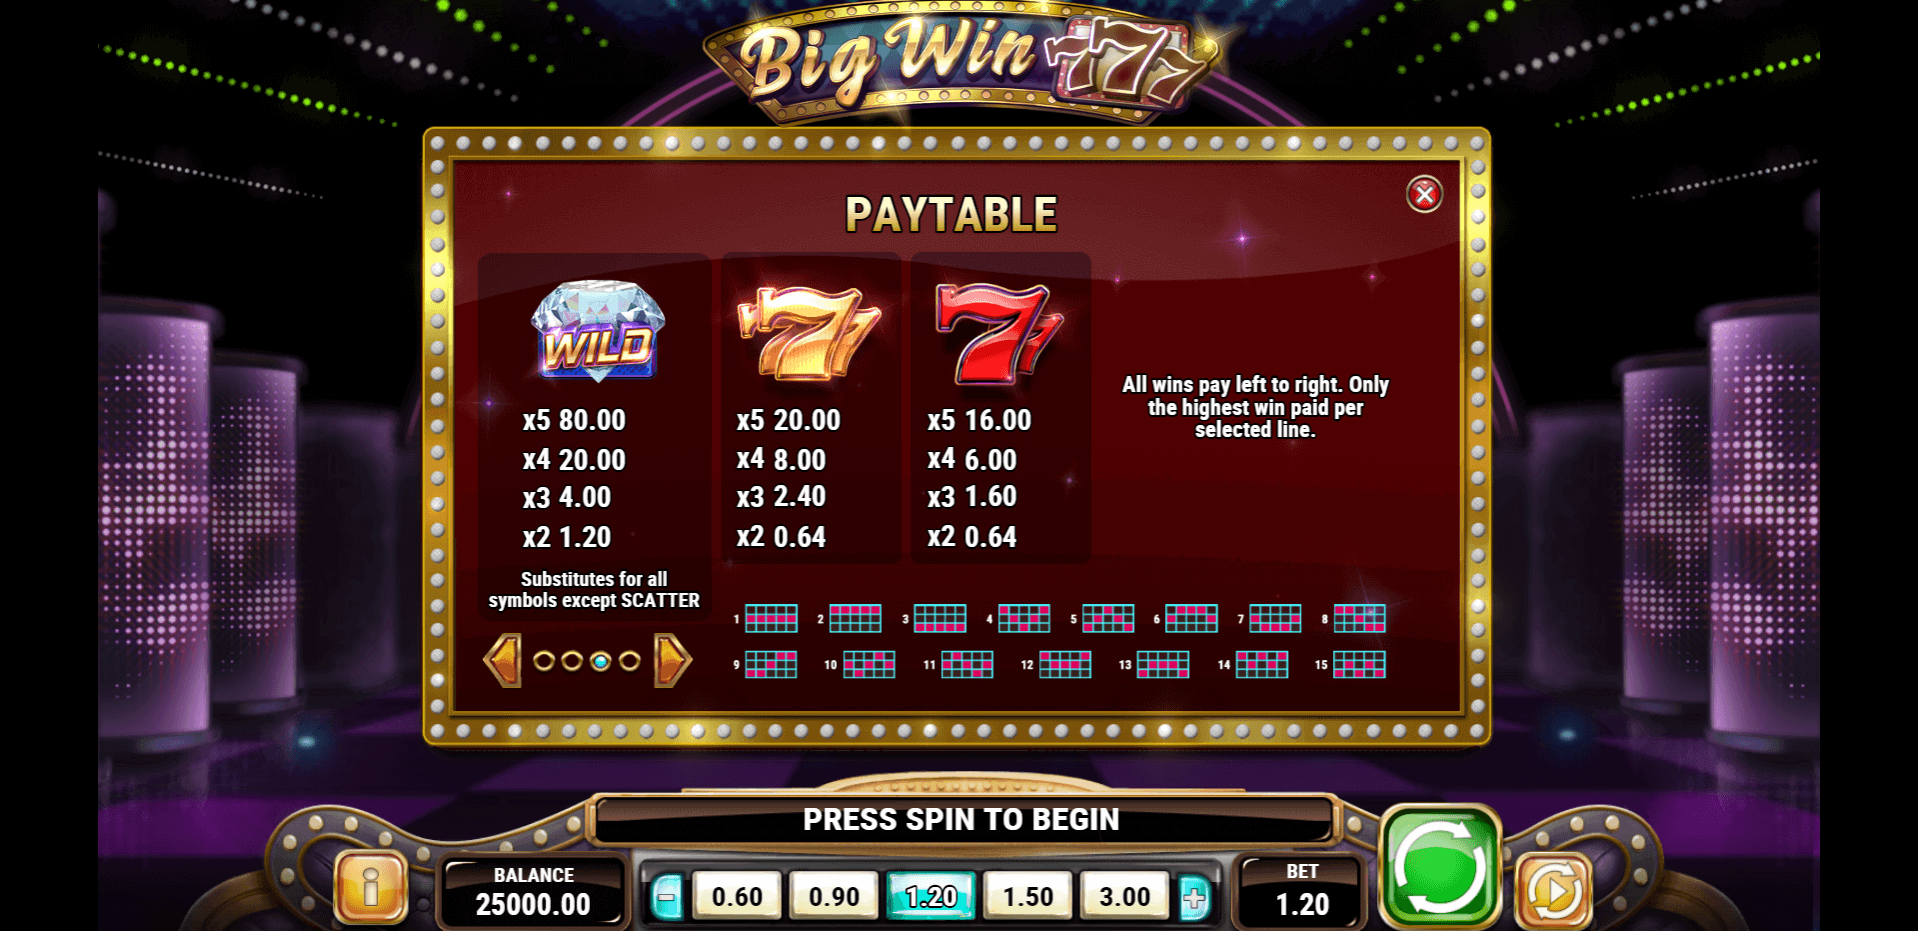 big win 777 slot machine detail image 2